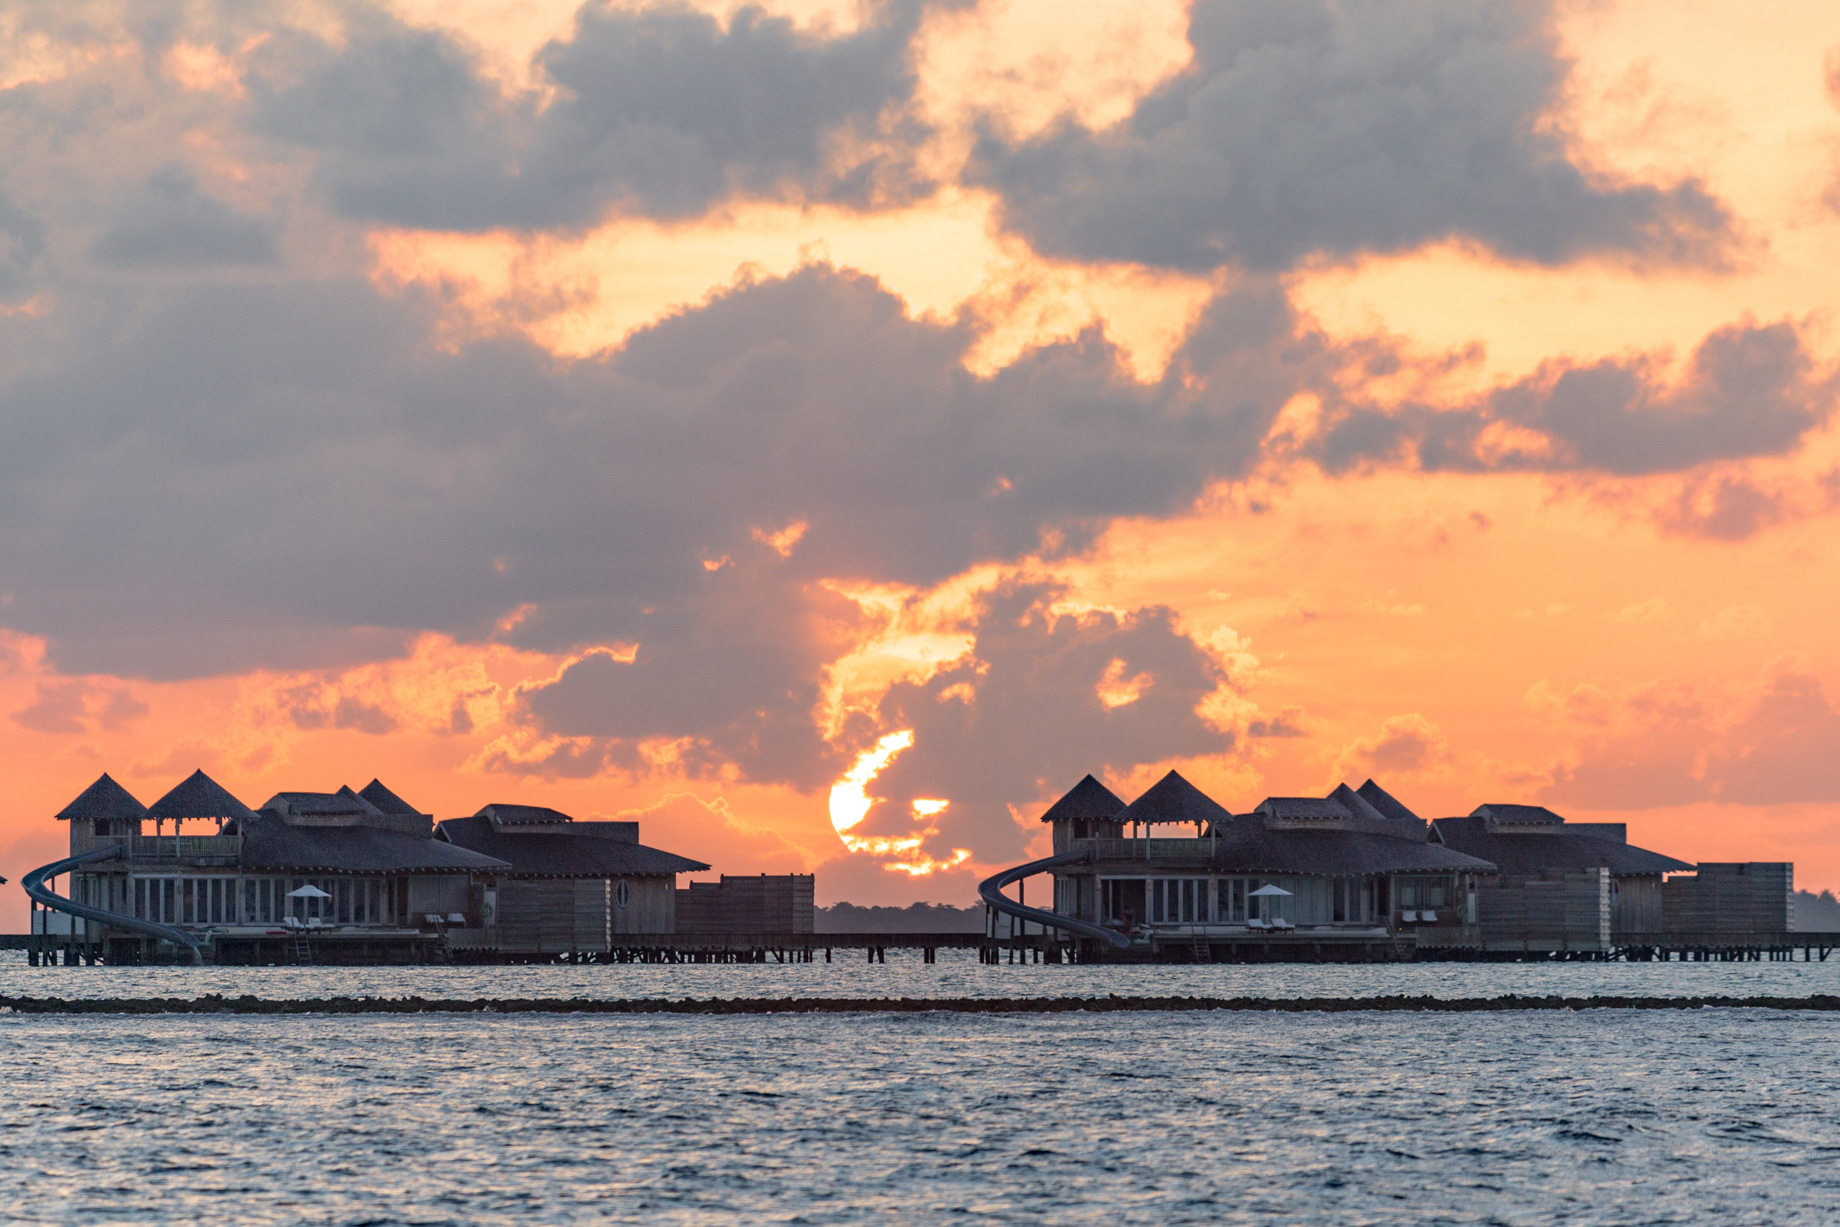 Soneva Jani Resort – Noonu Atoll, Medhufaru, Maldives – Overwater Villas Sunset